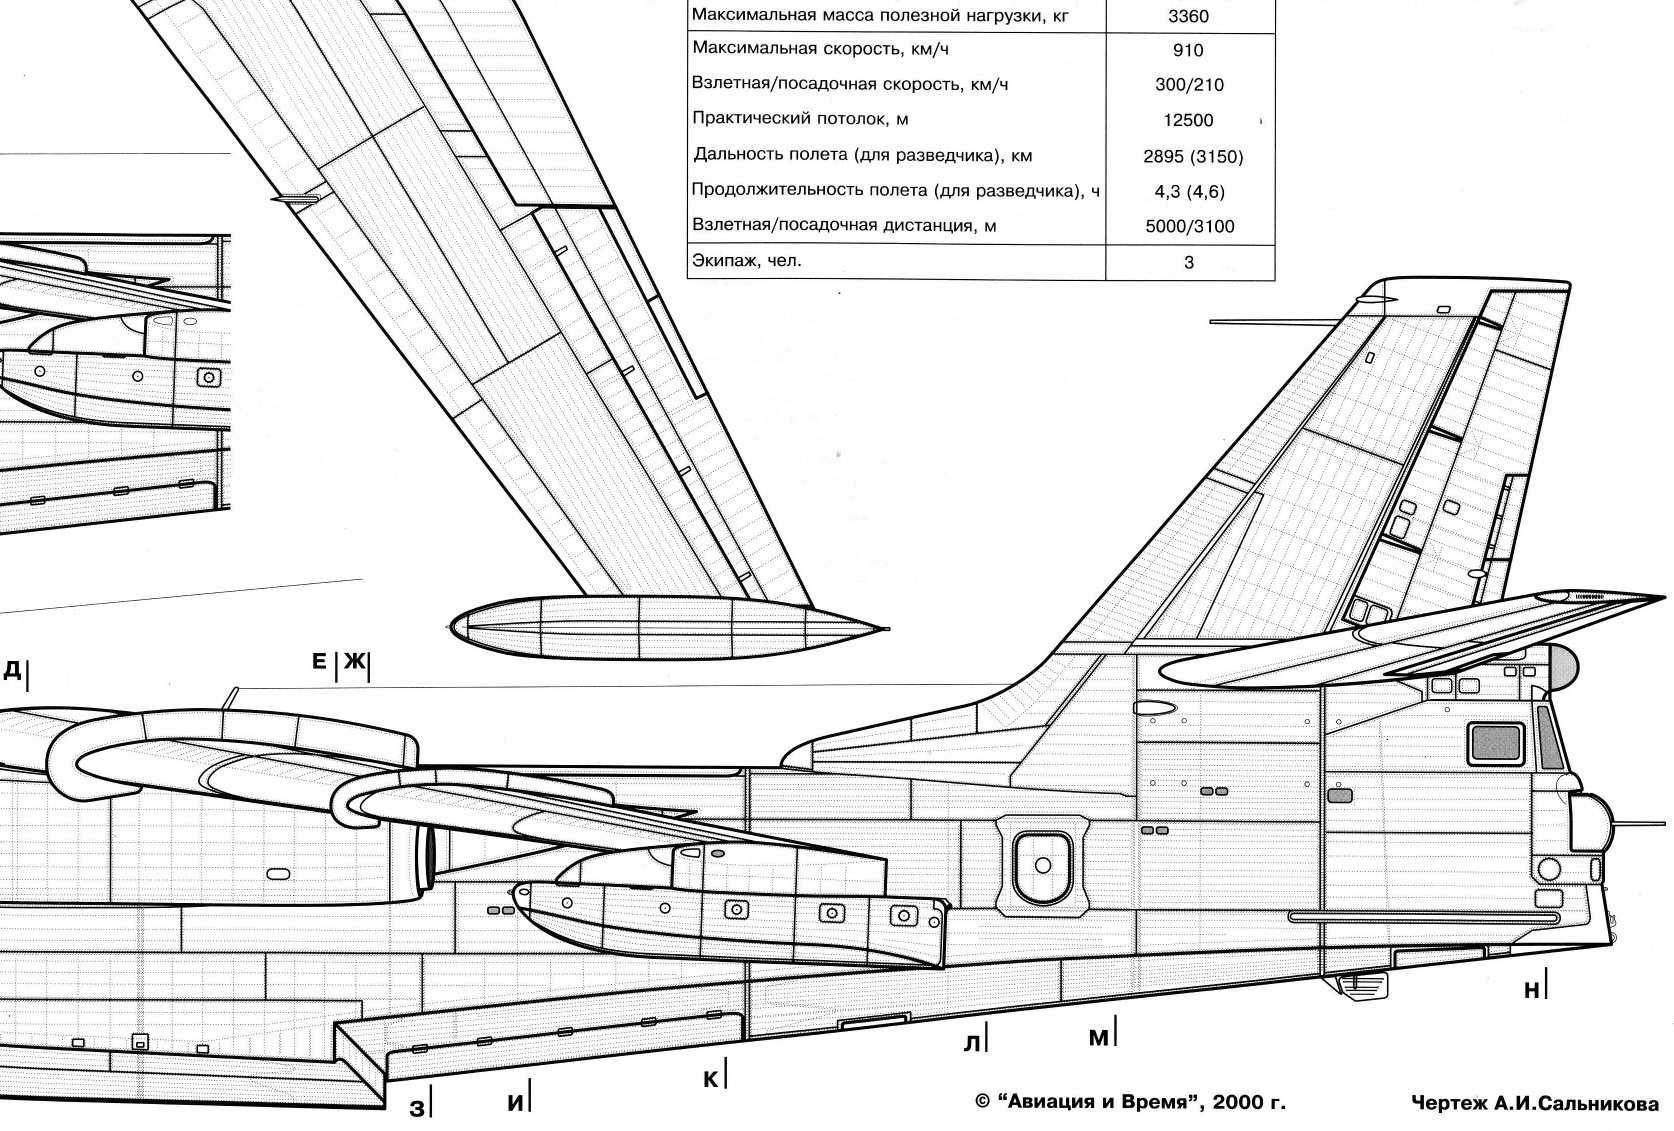 Beriev Be-10 blueprint